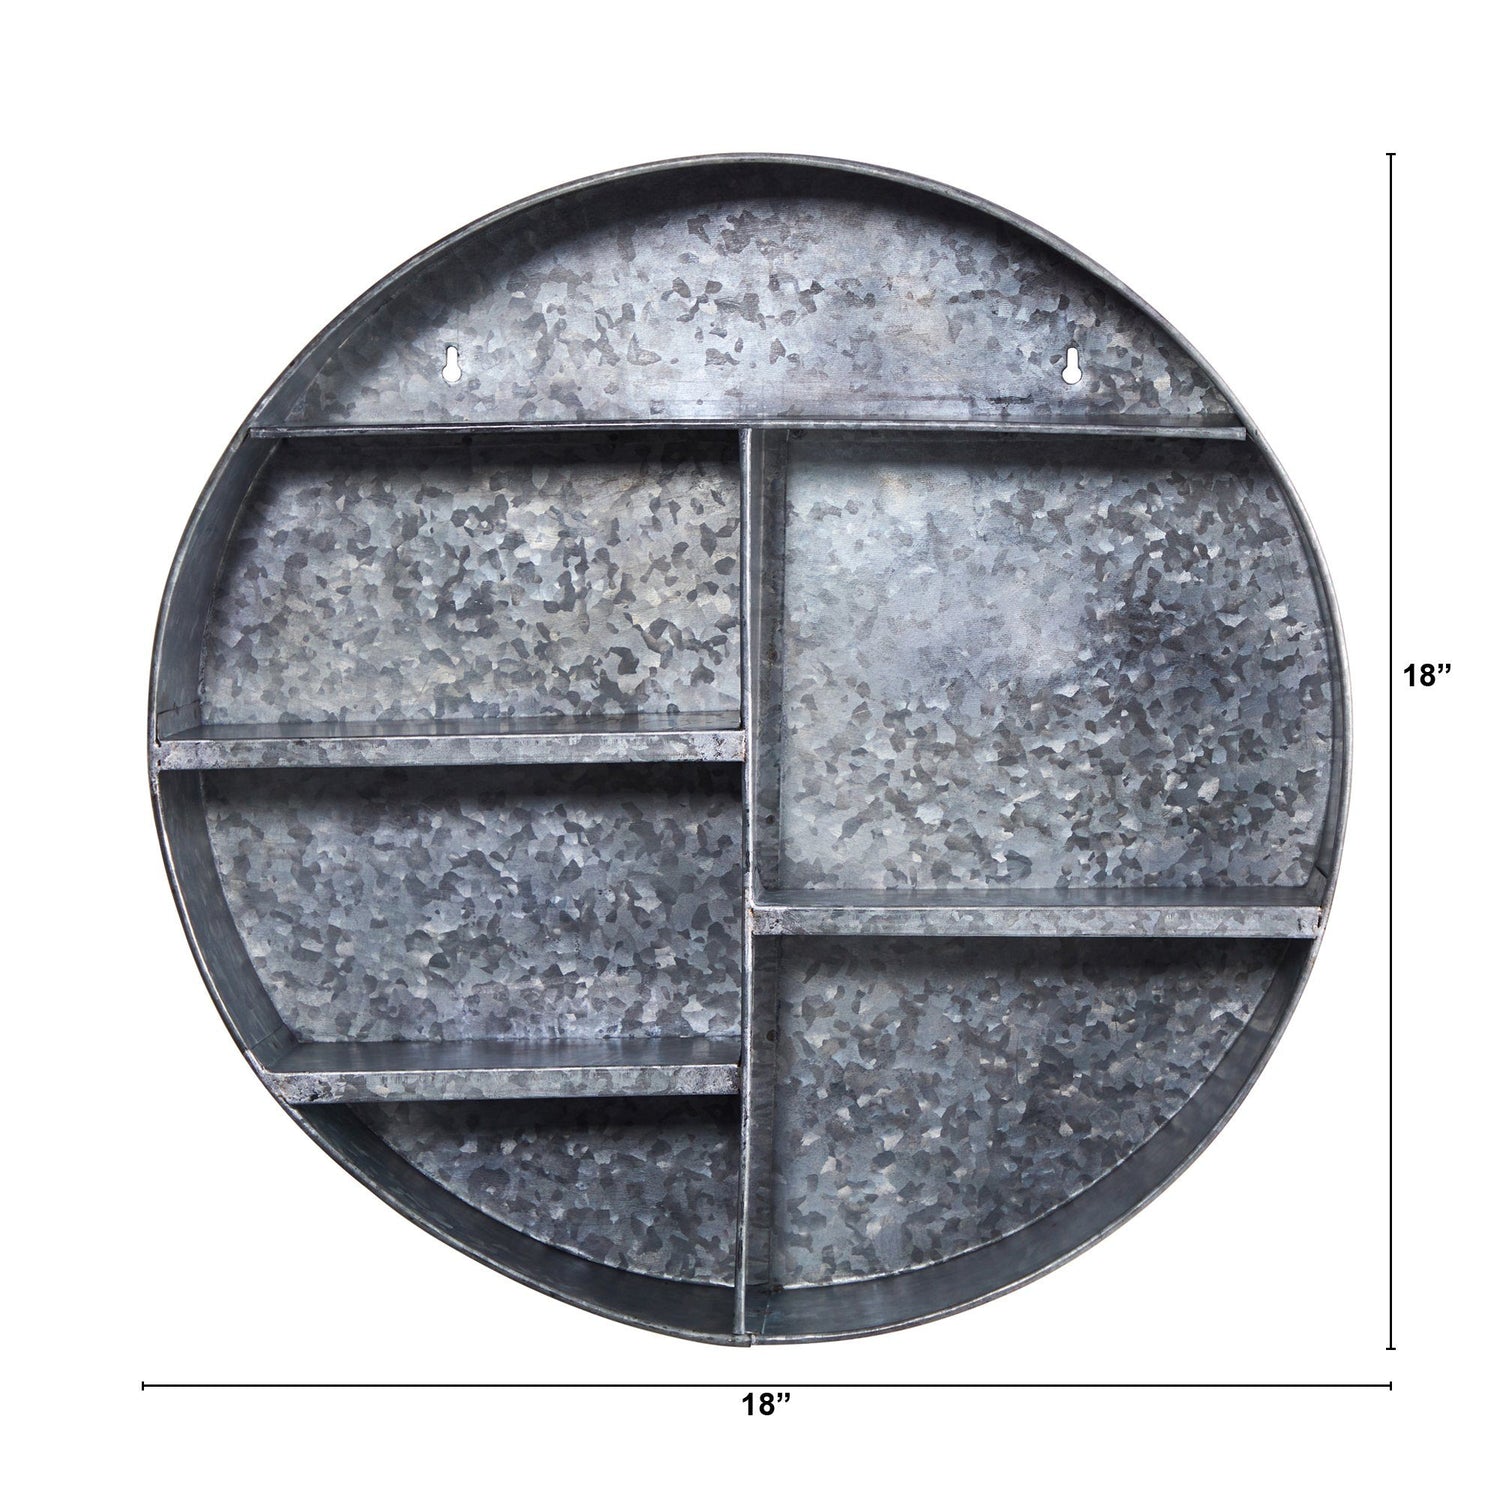 18” Galvanized Circular Metal Wall Mounted Shelf with Four Tier Shelves